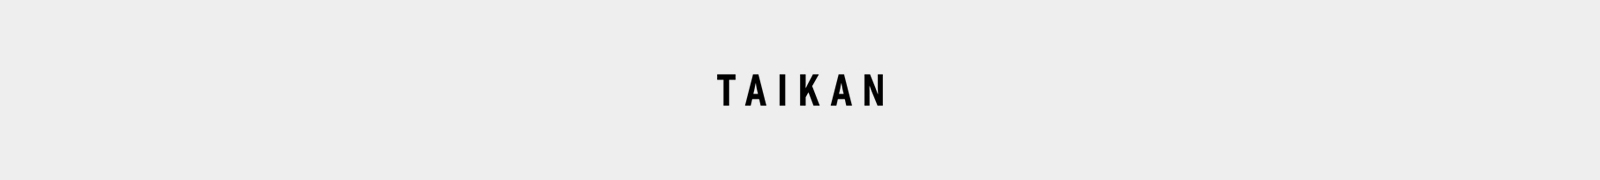 TAIKAN header image